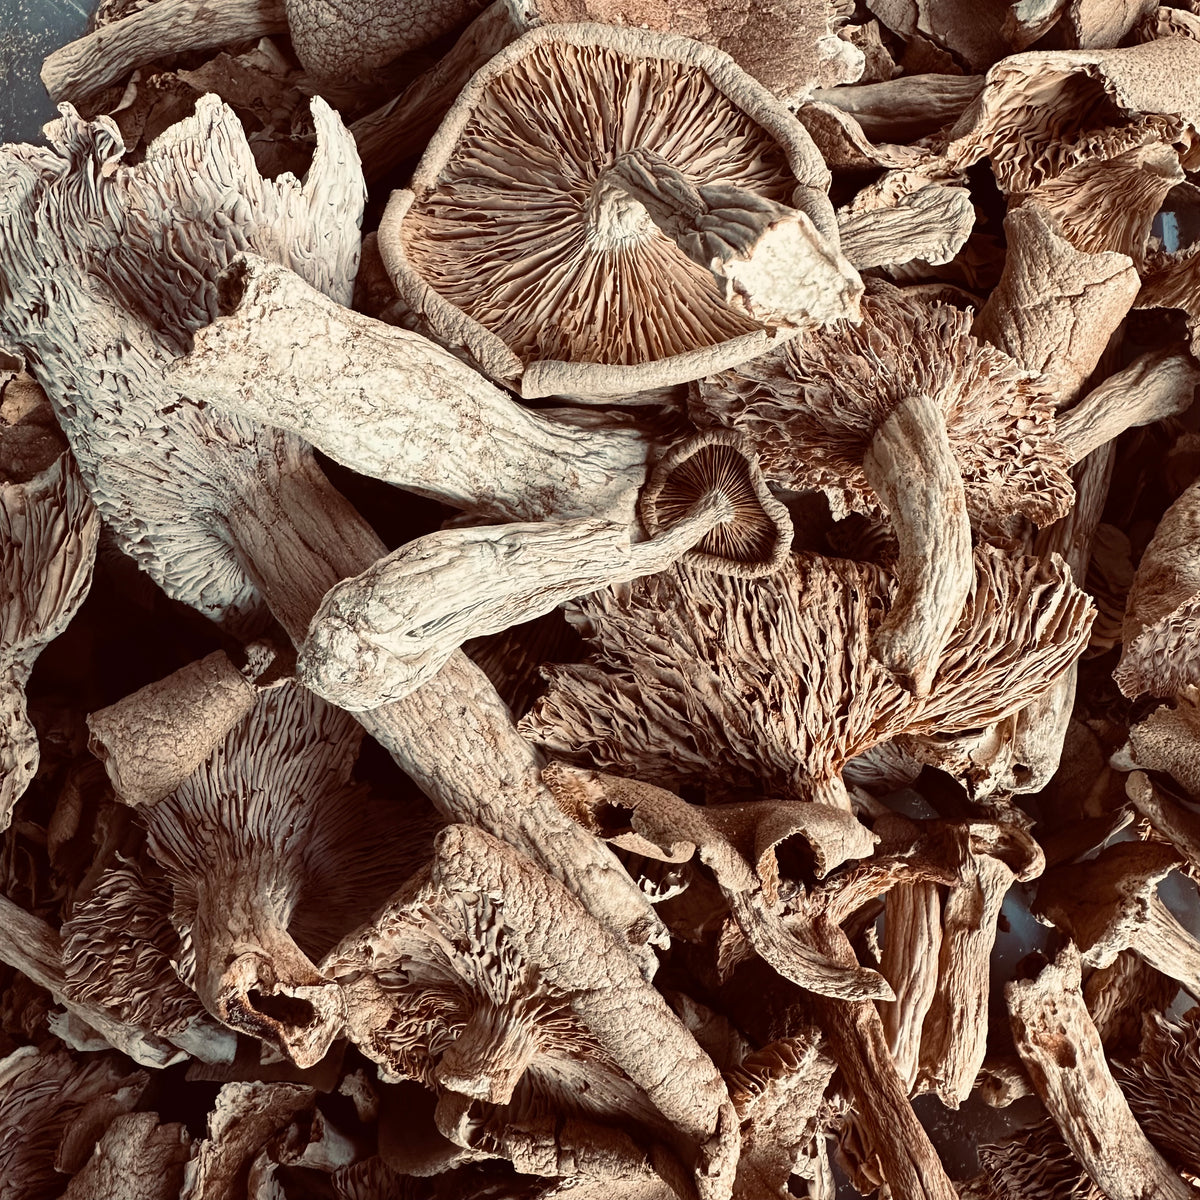 Local fenugreek milkcap mushroom 15g